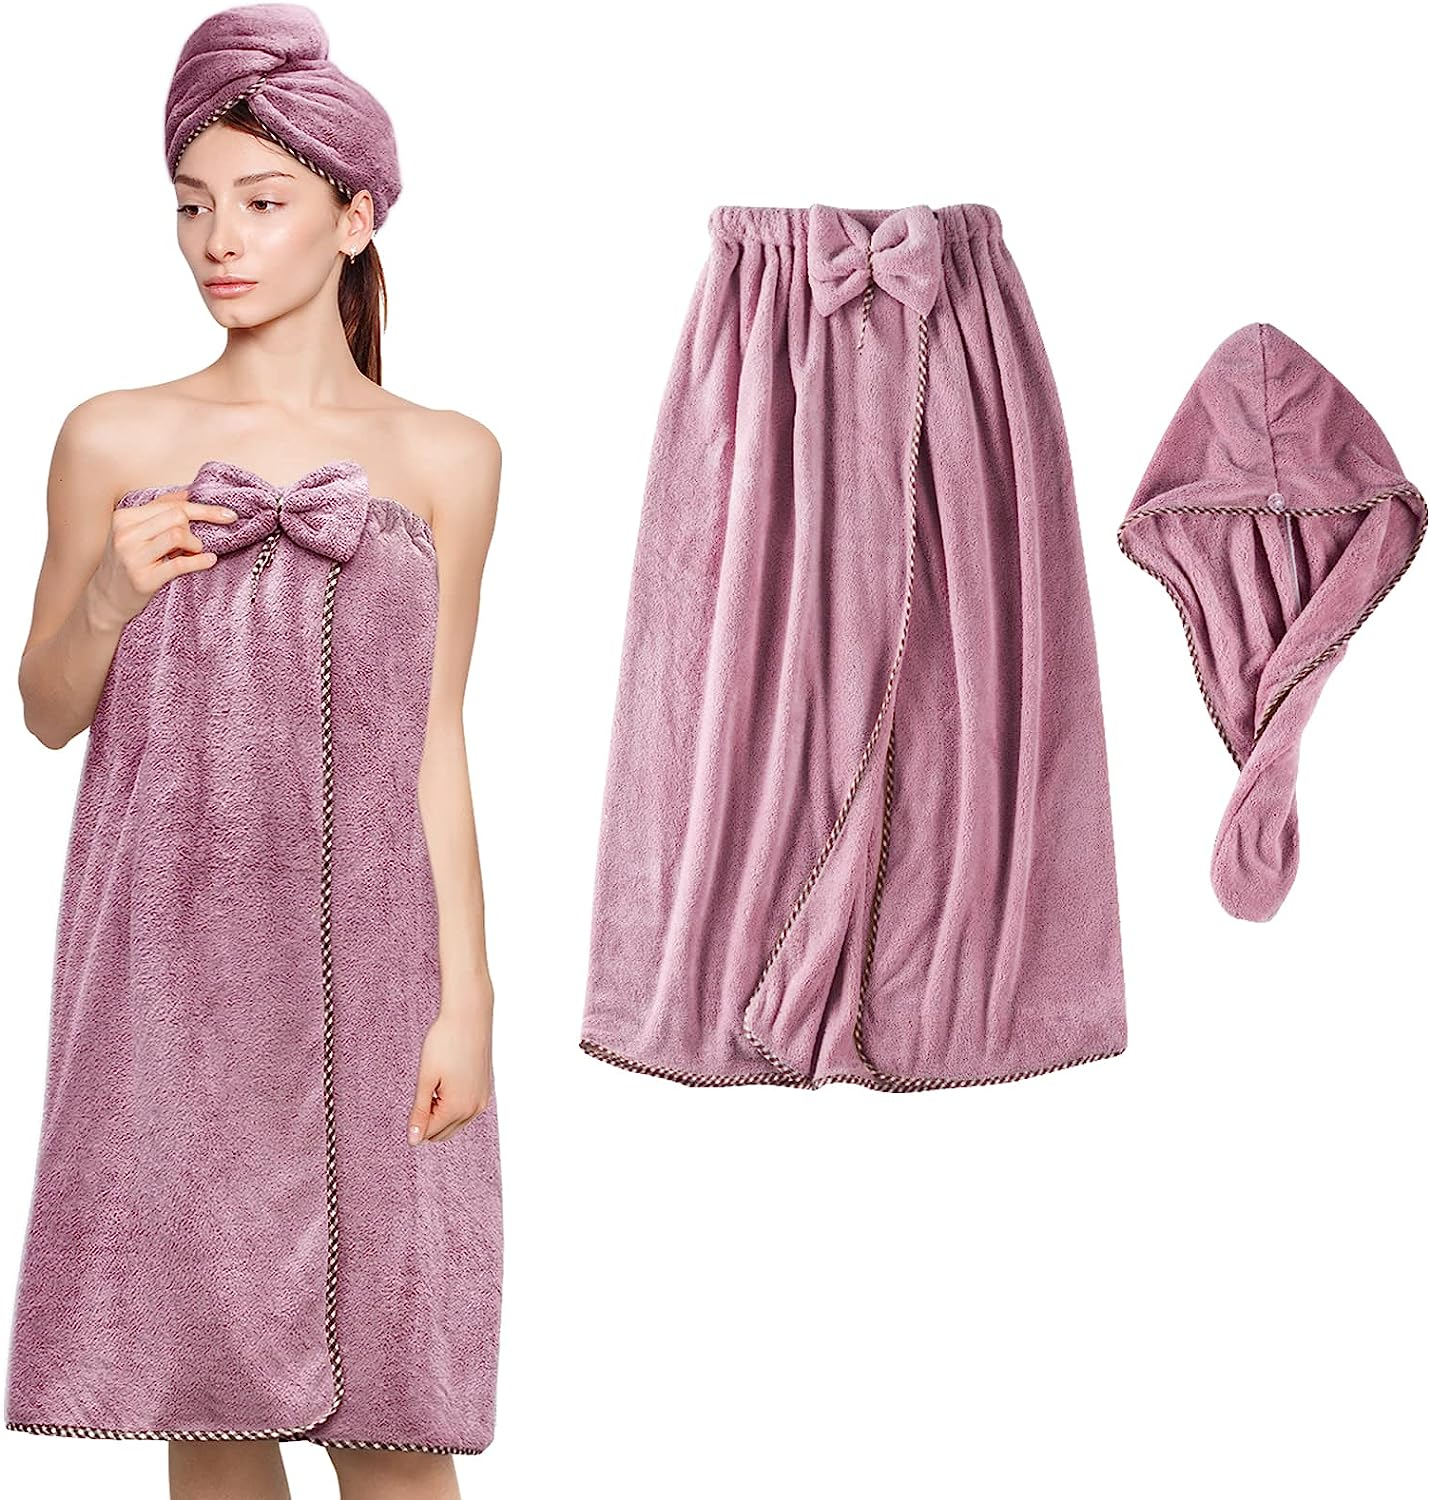 Spa Body Towel Wrap with Hair Towel Super Soft Lightweight Bath Wrap Robe Towel